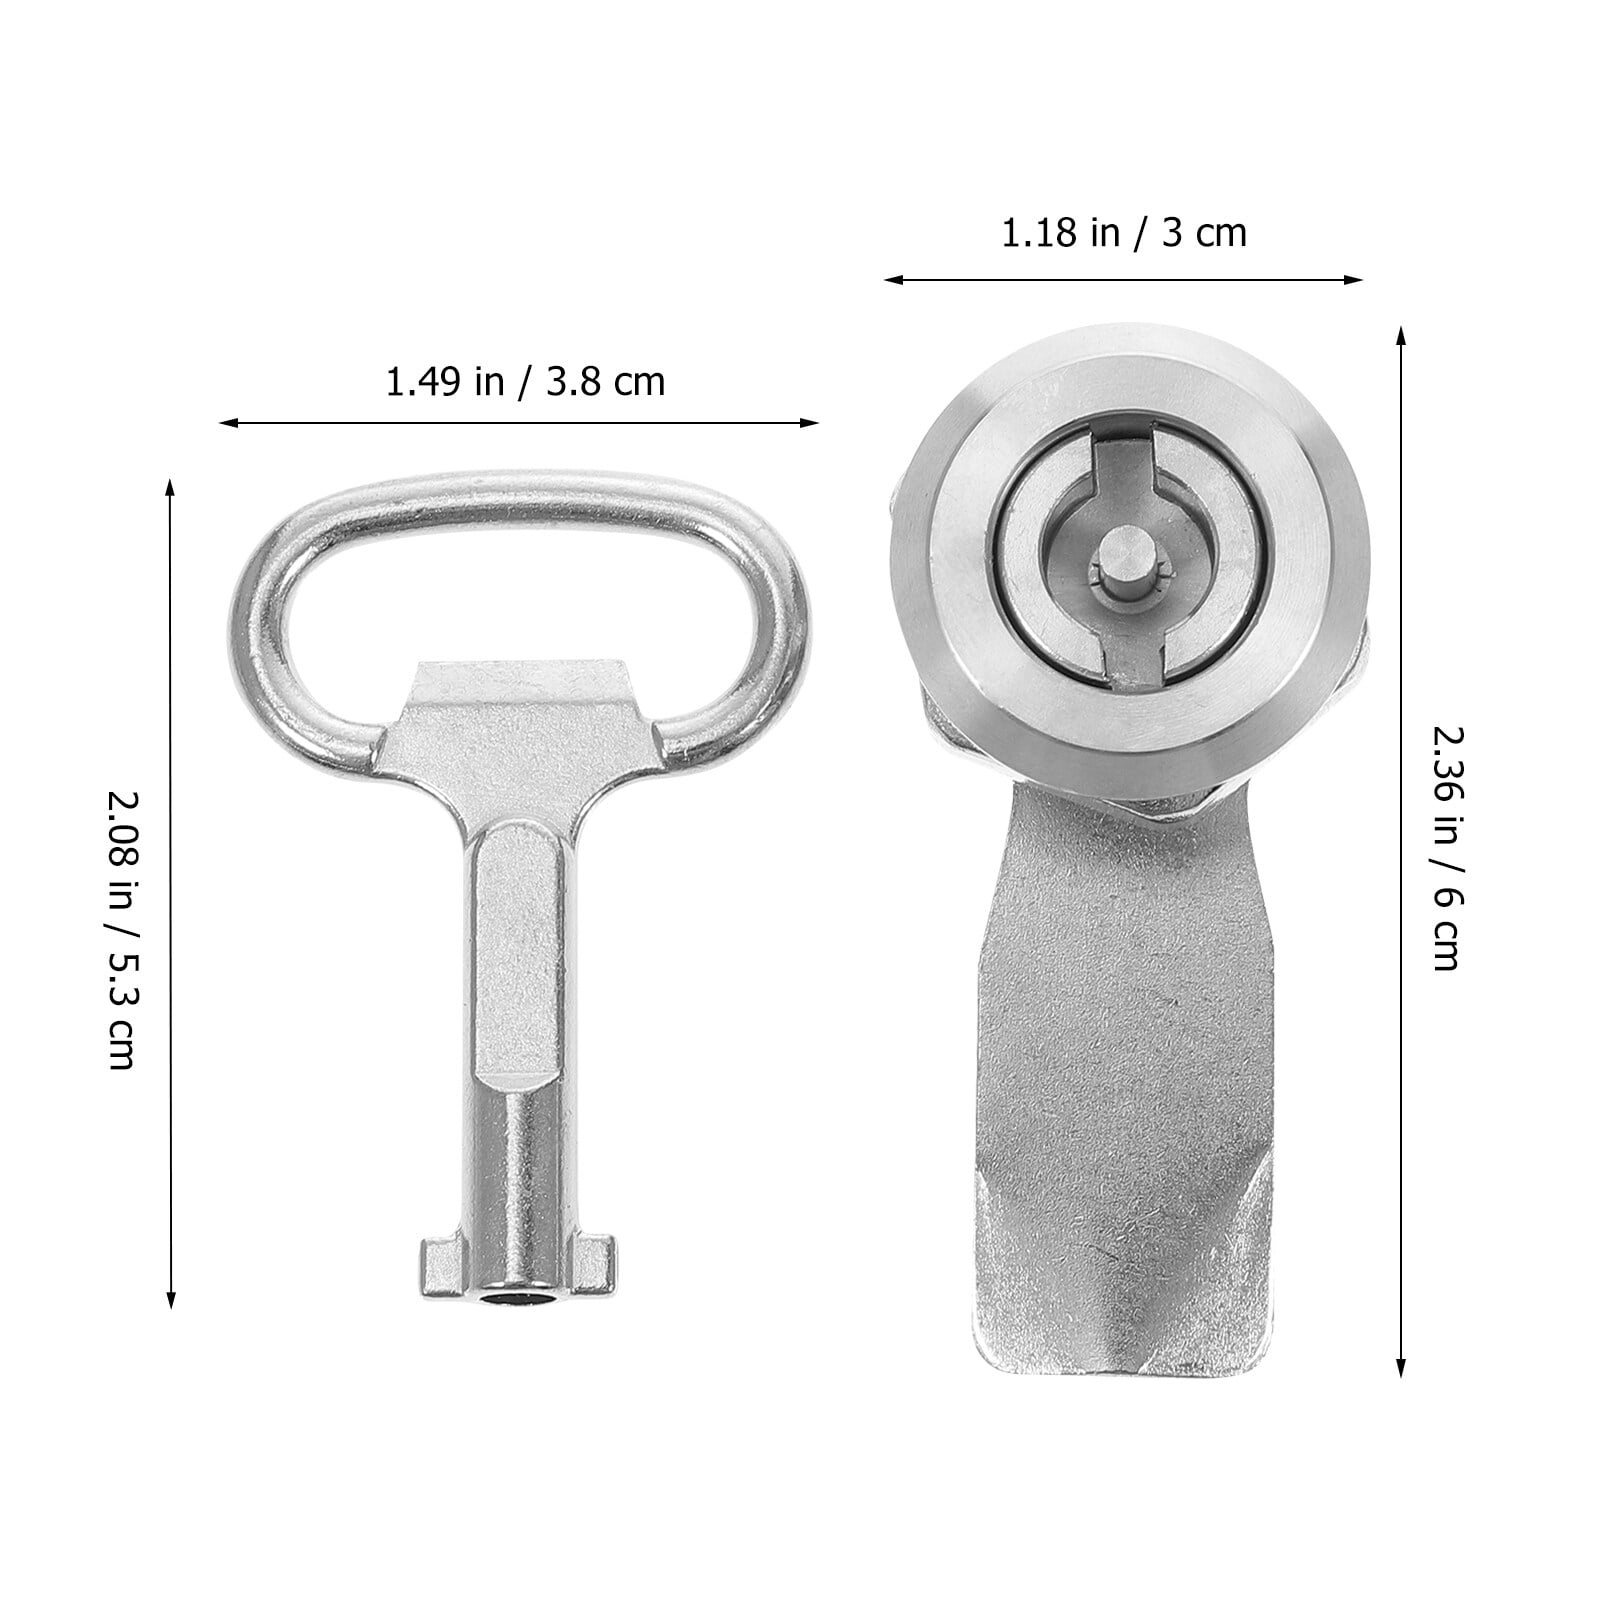 Tubular Lock File Cabinet Lock Replacement Drawer Lock with Square Socket  Key